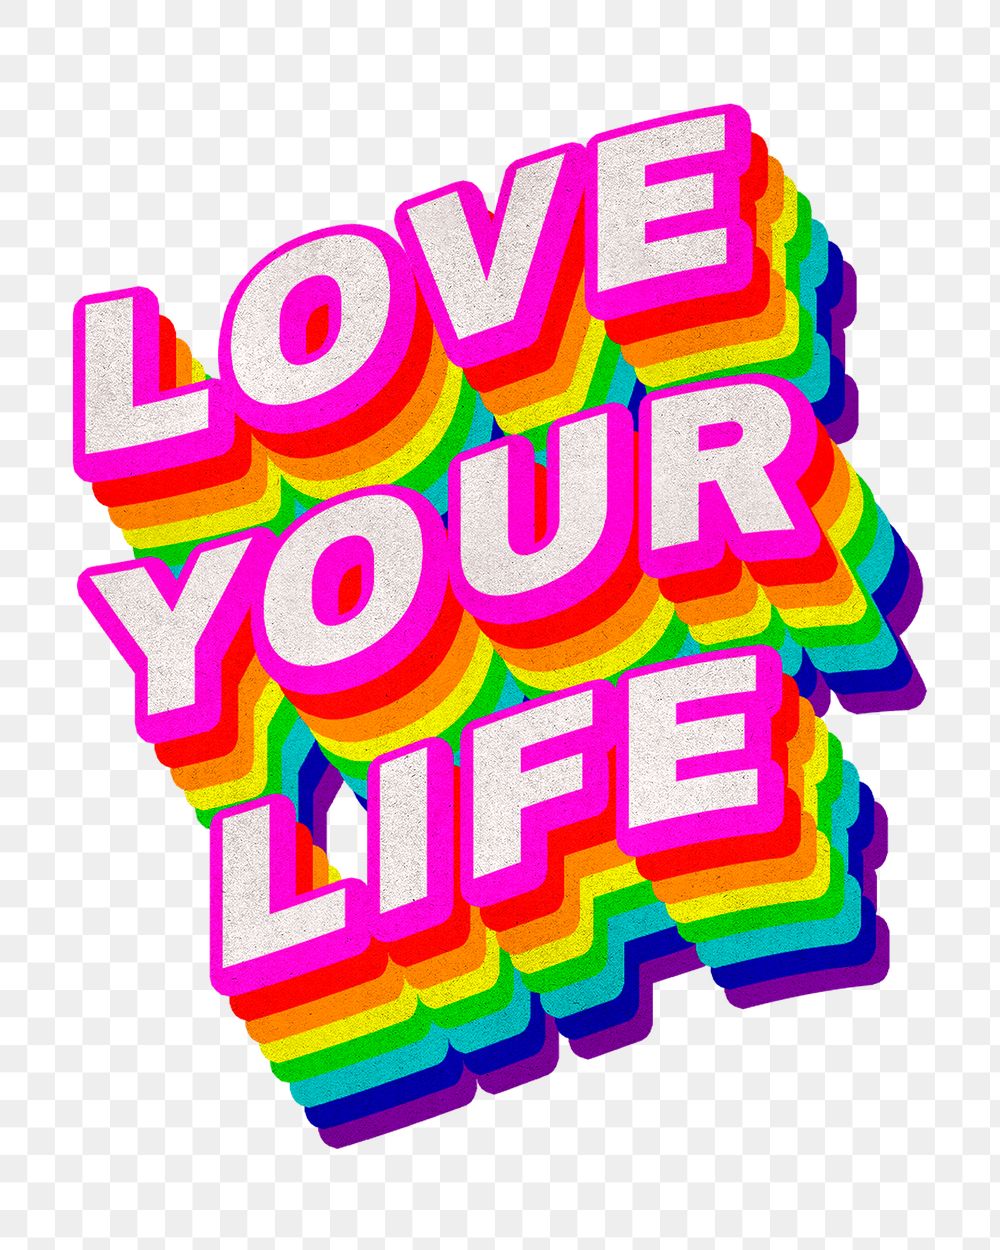 Rainbow word LOVE YOUR LIFE typography design element